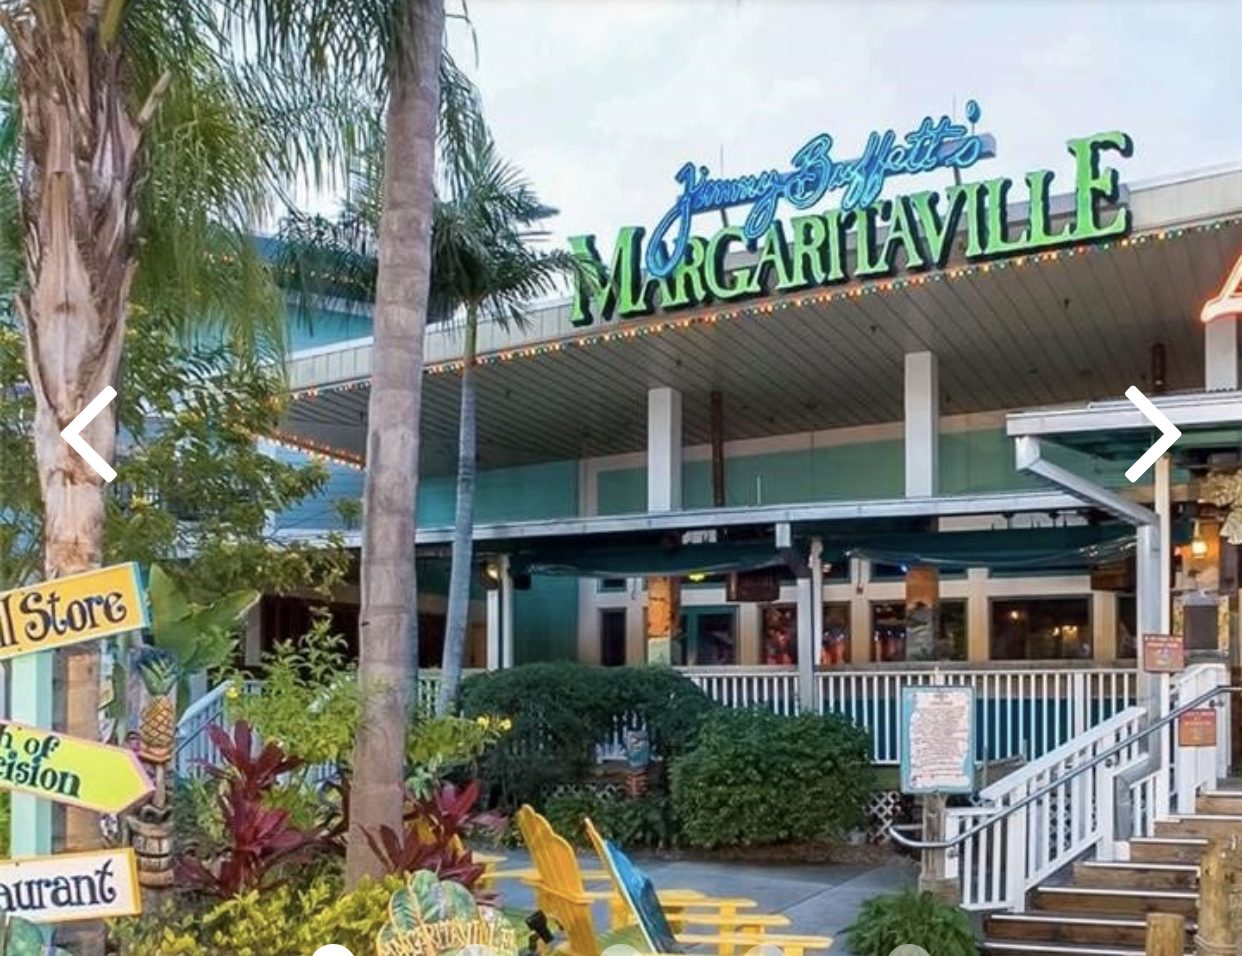 Top 10 Best Universal Orlando Resort Restaurants according to Yelp